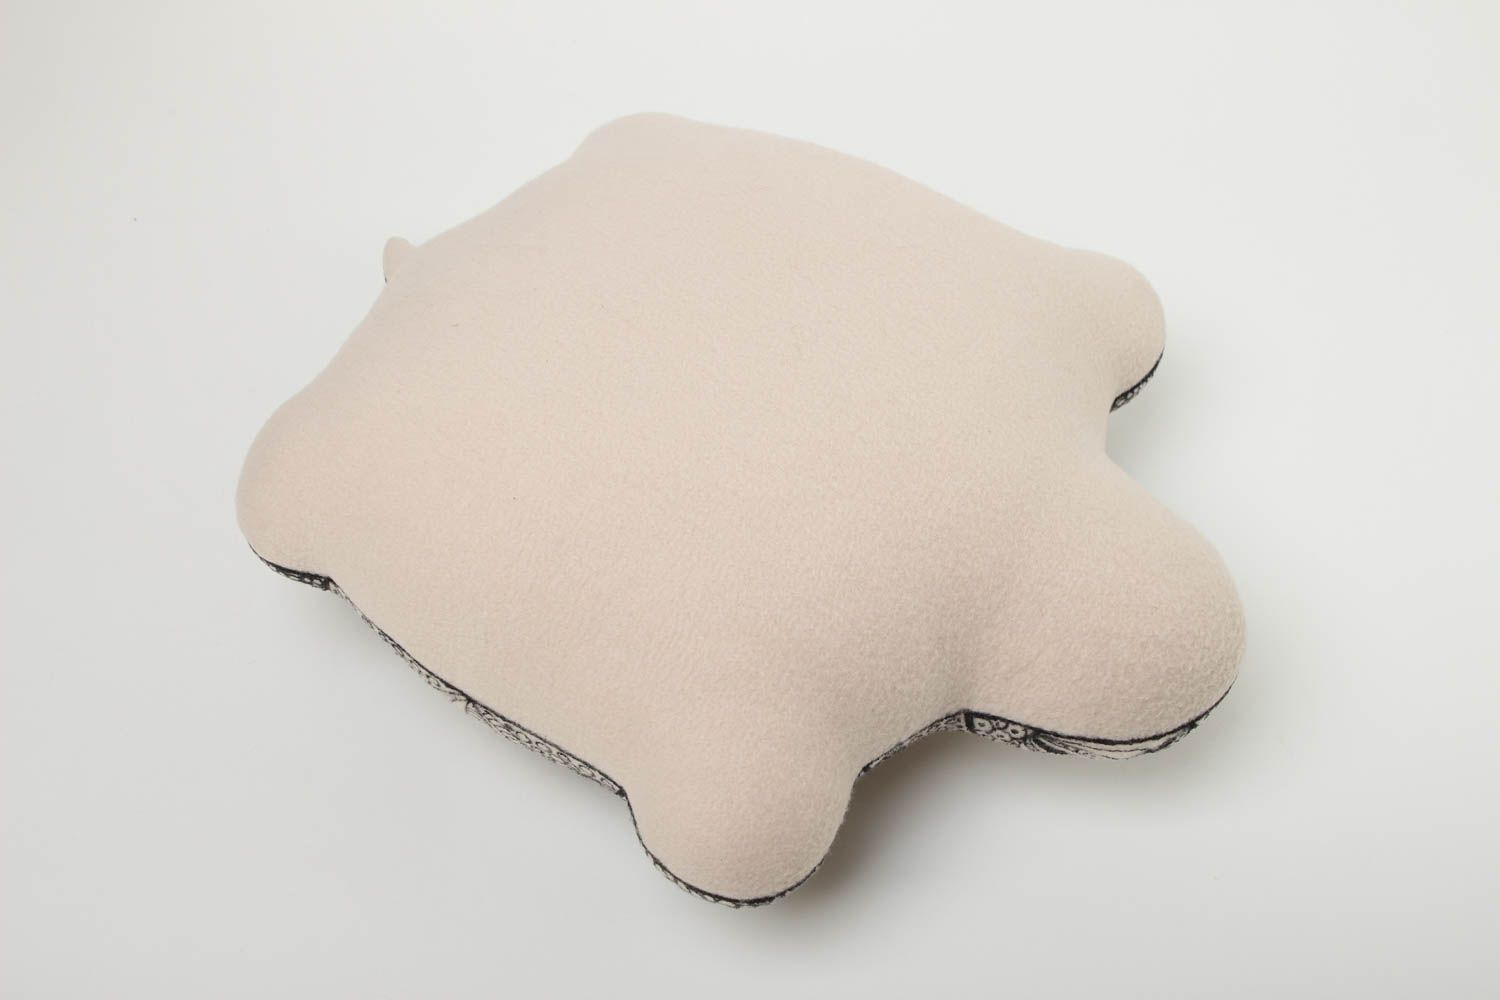 Handmade pet pillow sofa cushion handmade accessories interior decor ideas photo 4